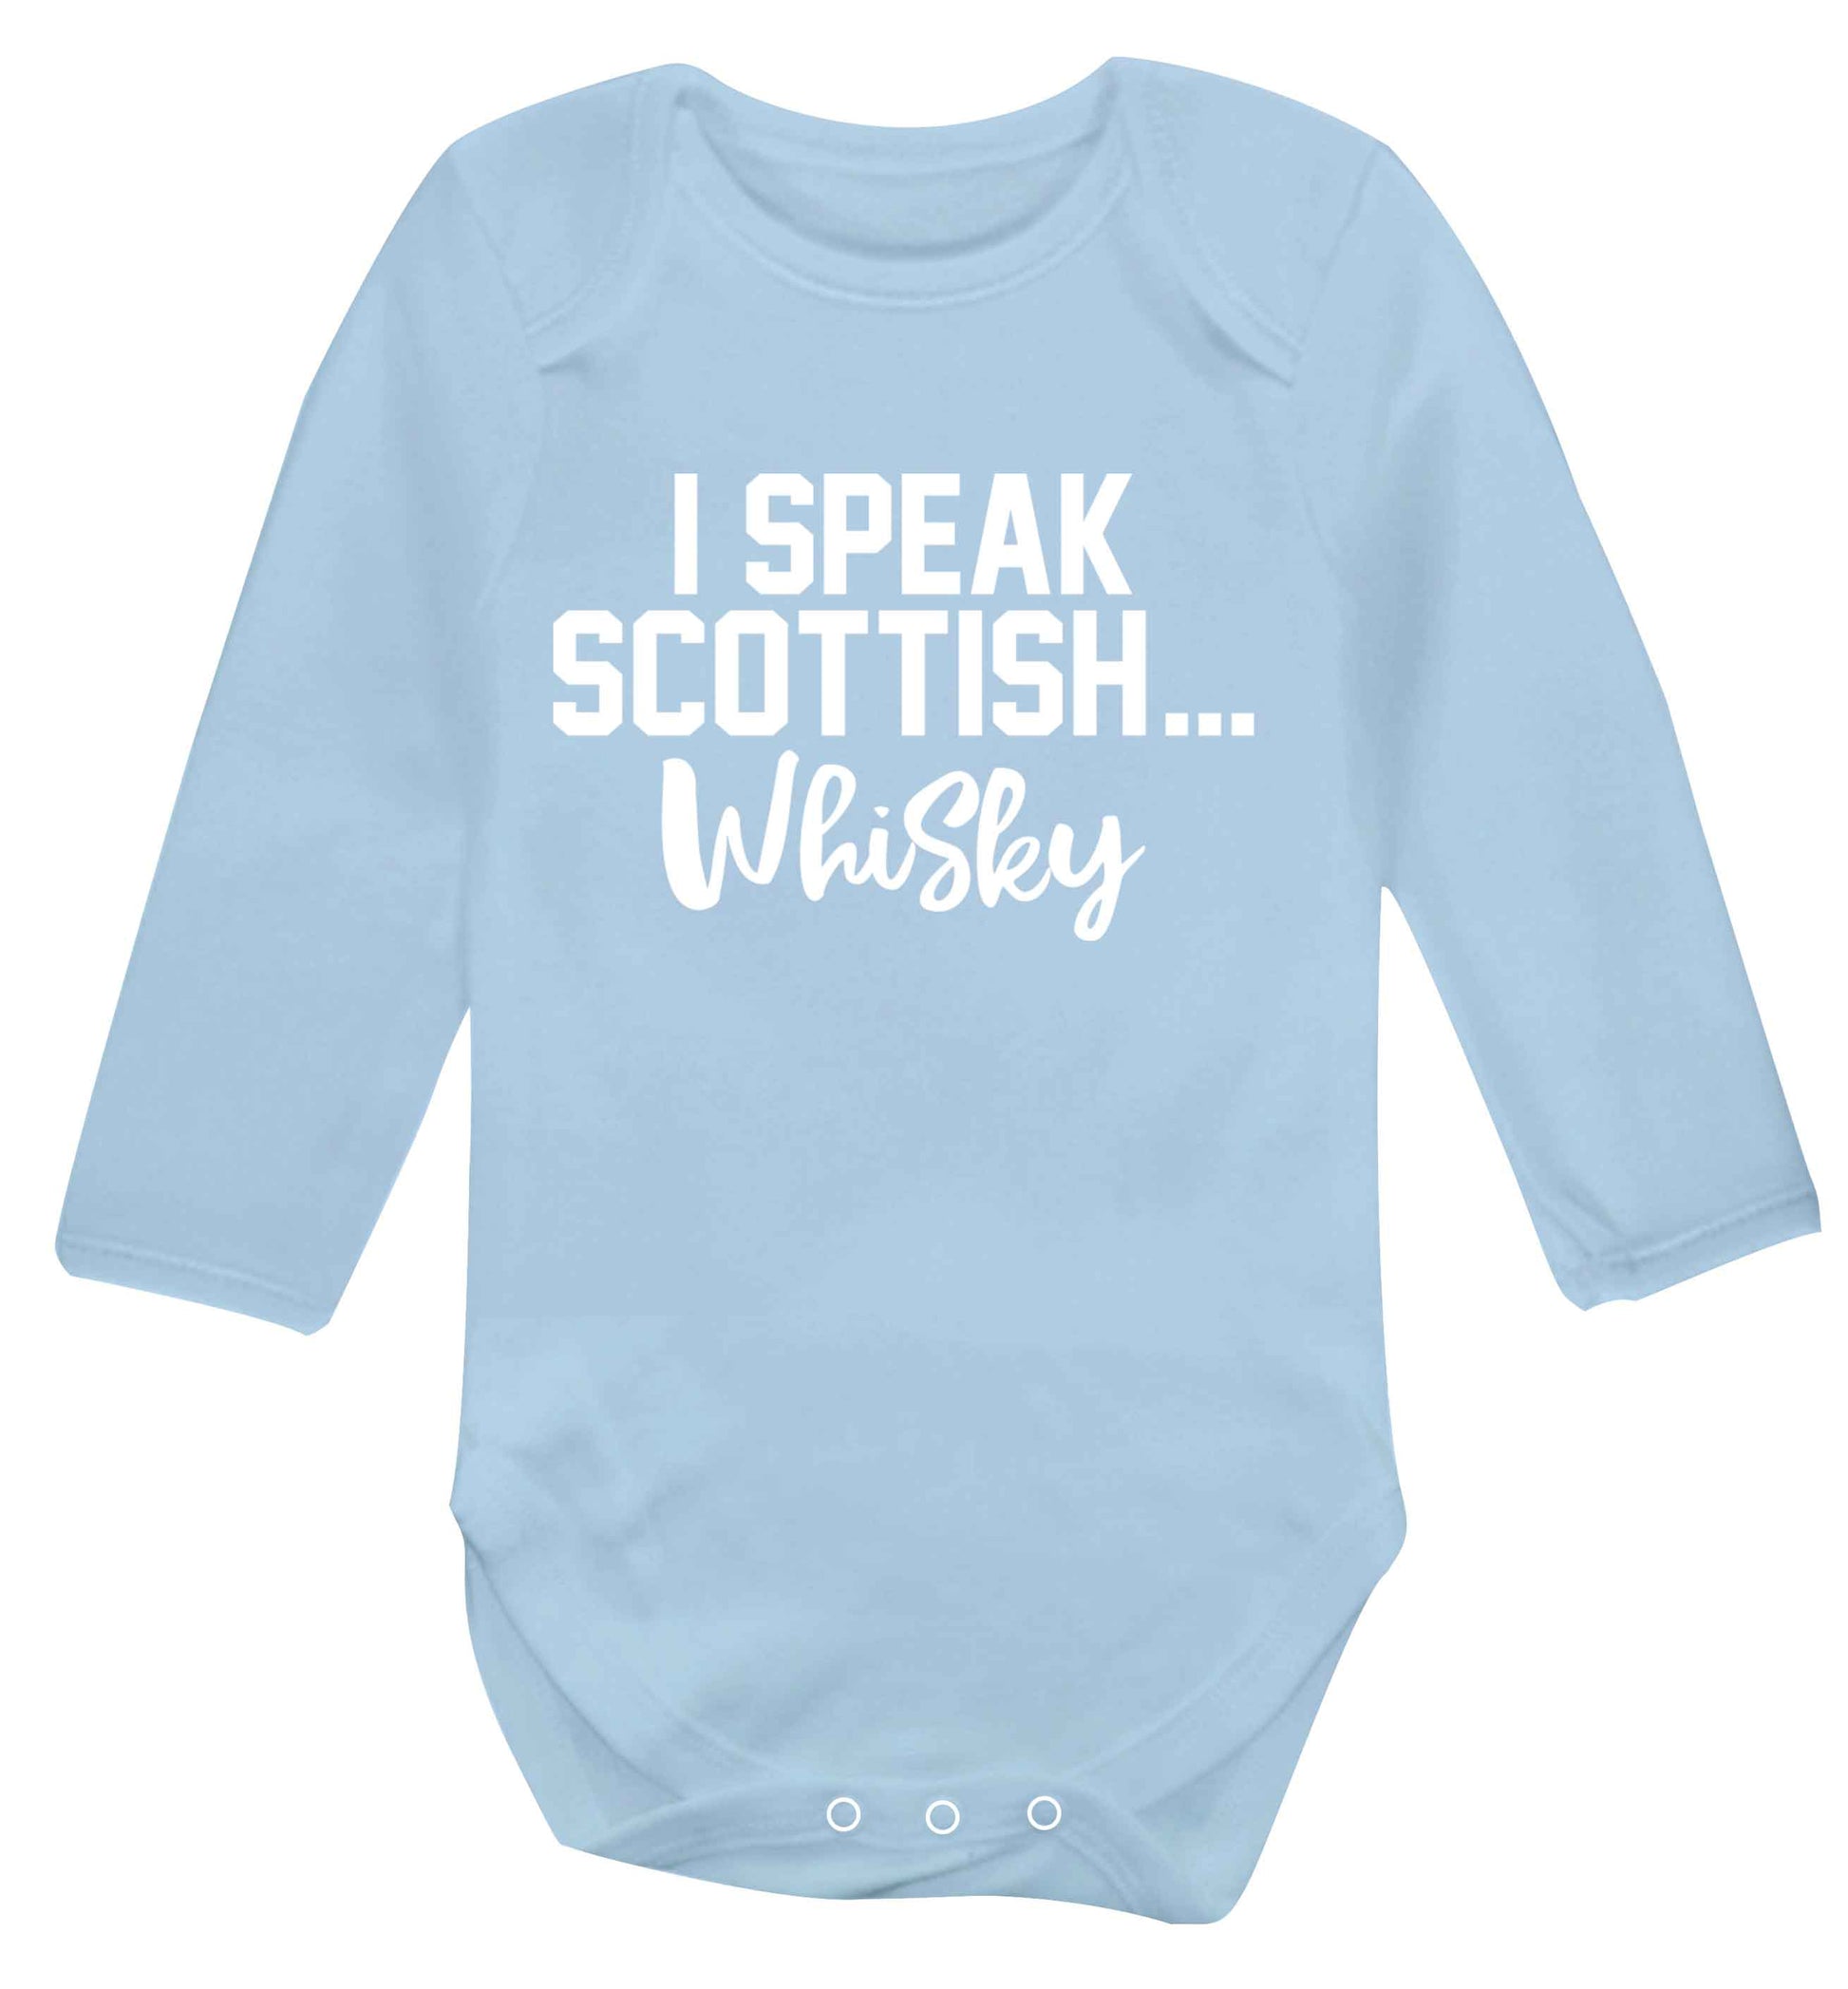 I speak scottish...whisky Baby Vest long sleeved pale blue 6-12 months